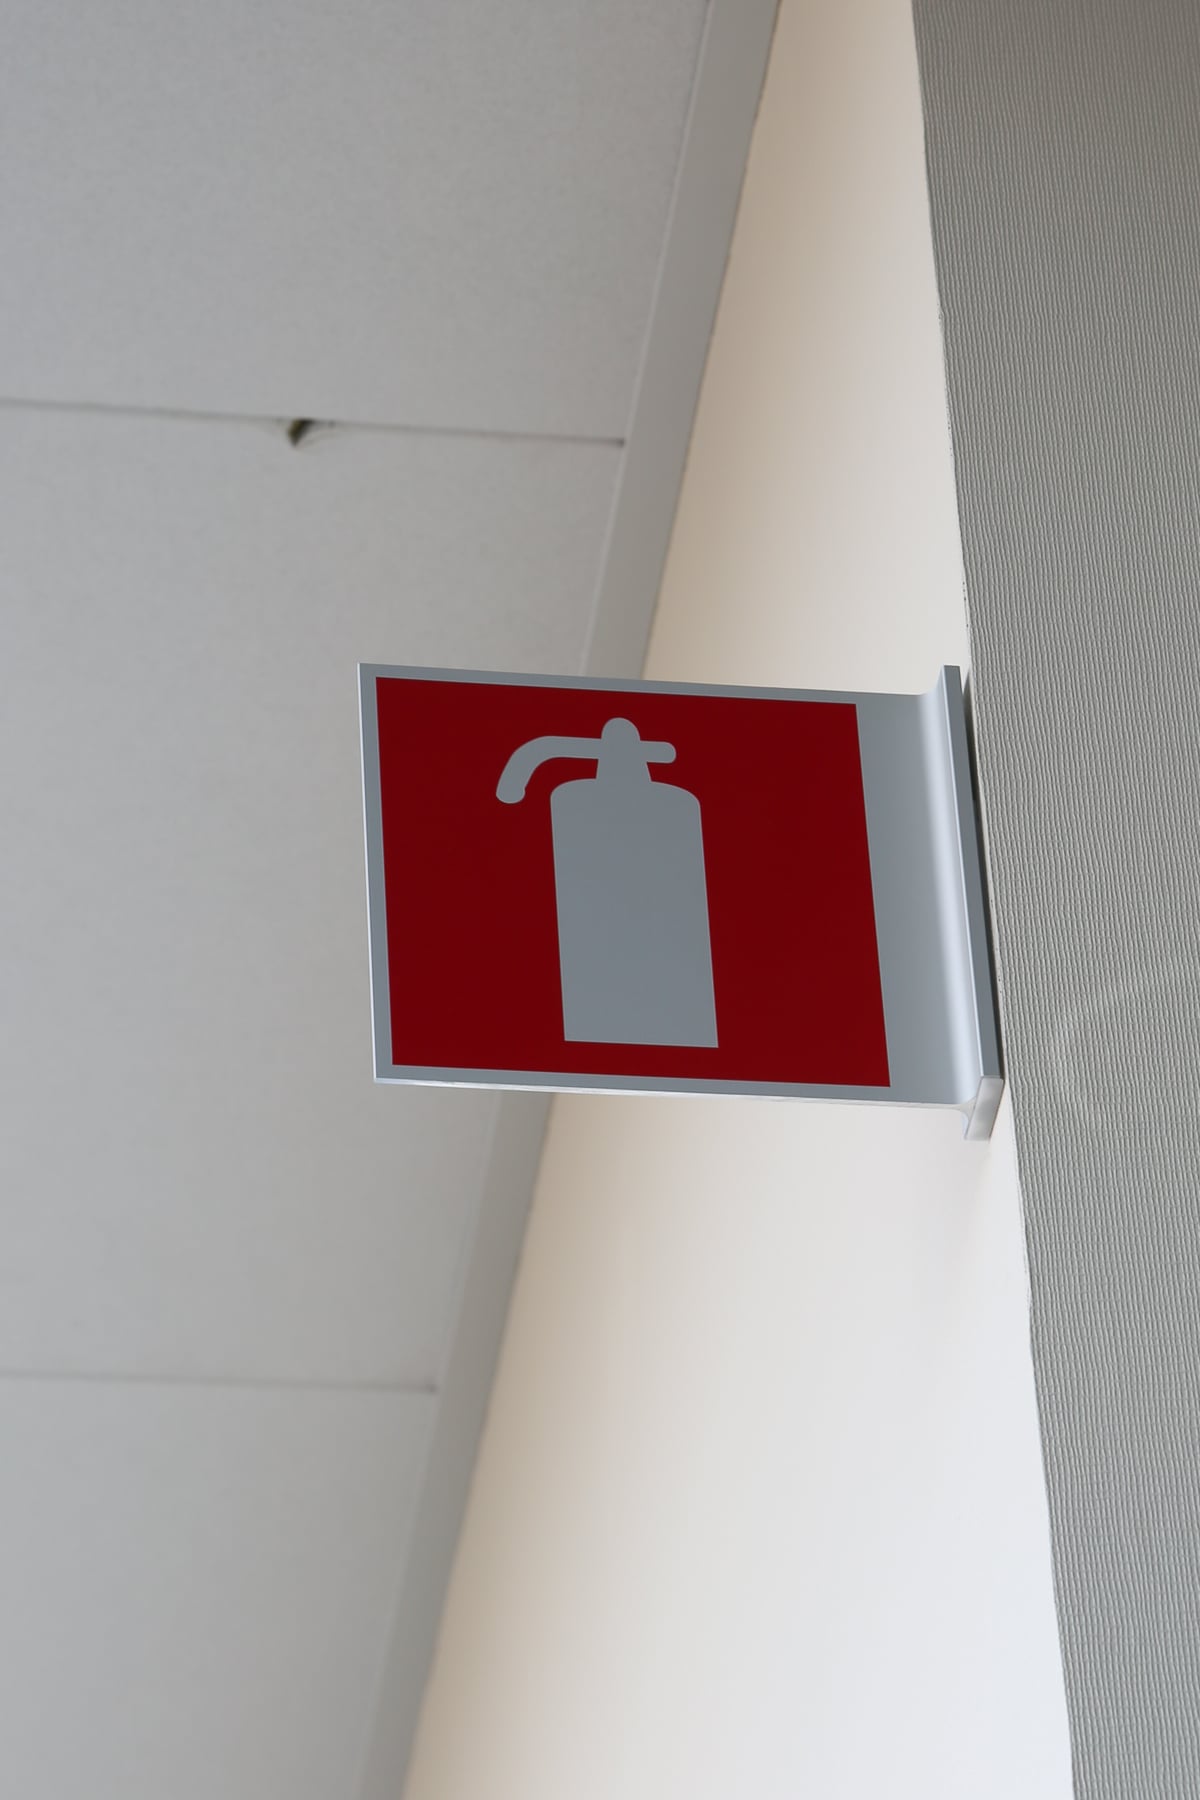 Veiligheidsignalisatie - Stayen - Sint-Truiden - Sign & Display